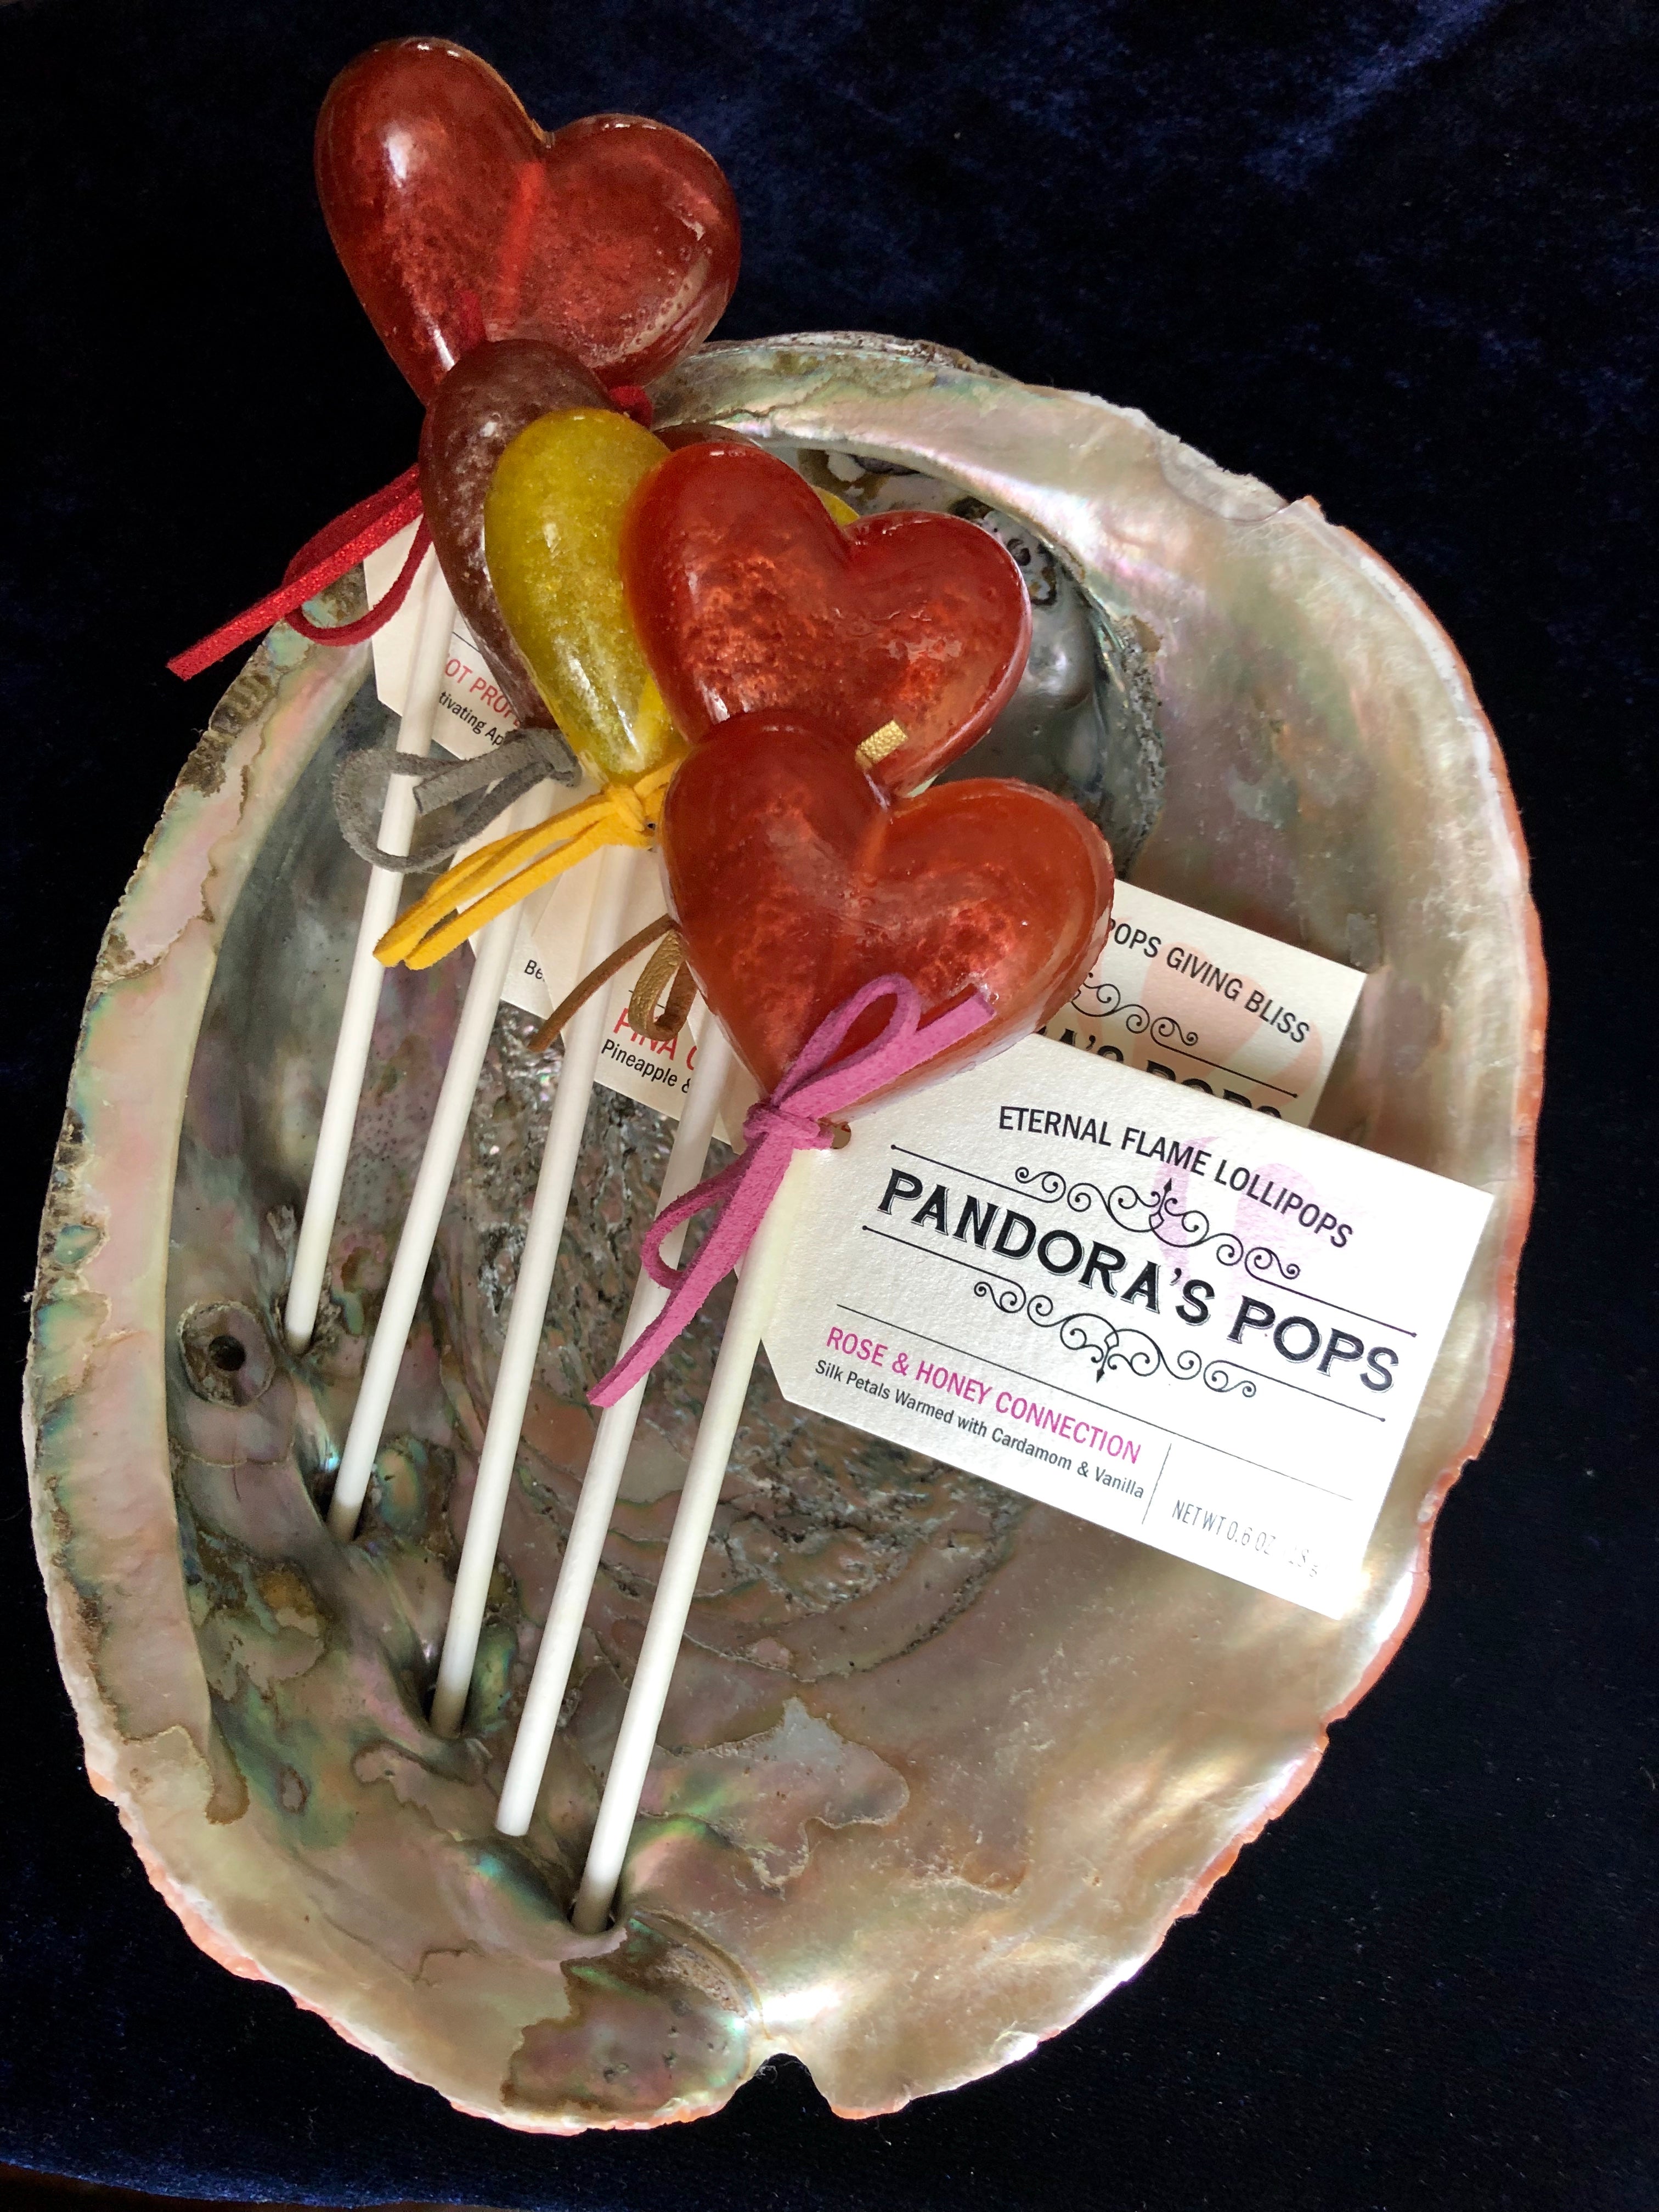 Monthly Gift Box Club: Aphrodisiac Lollipops